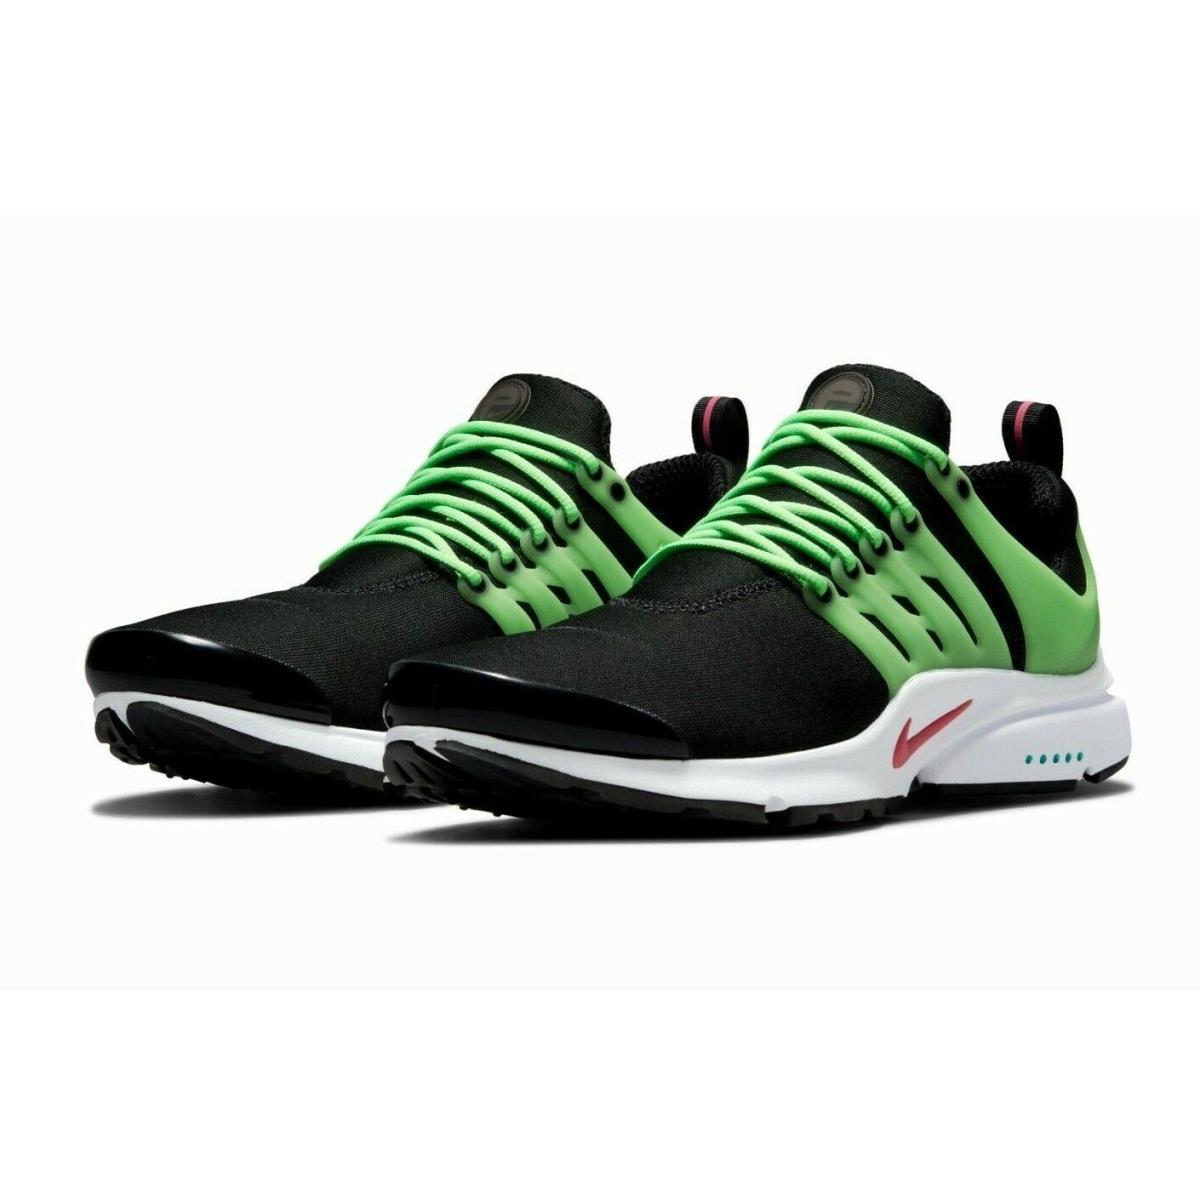 Nike Air Presto Mens Size 10 Sneaker Shoes DJ5143 001 Green Strike Black - Multicolor